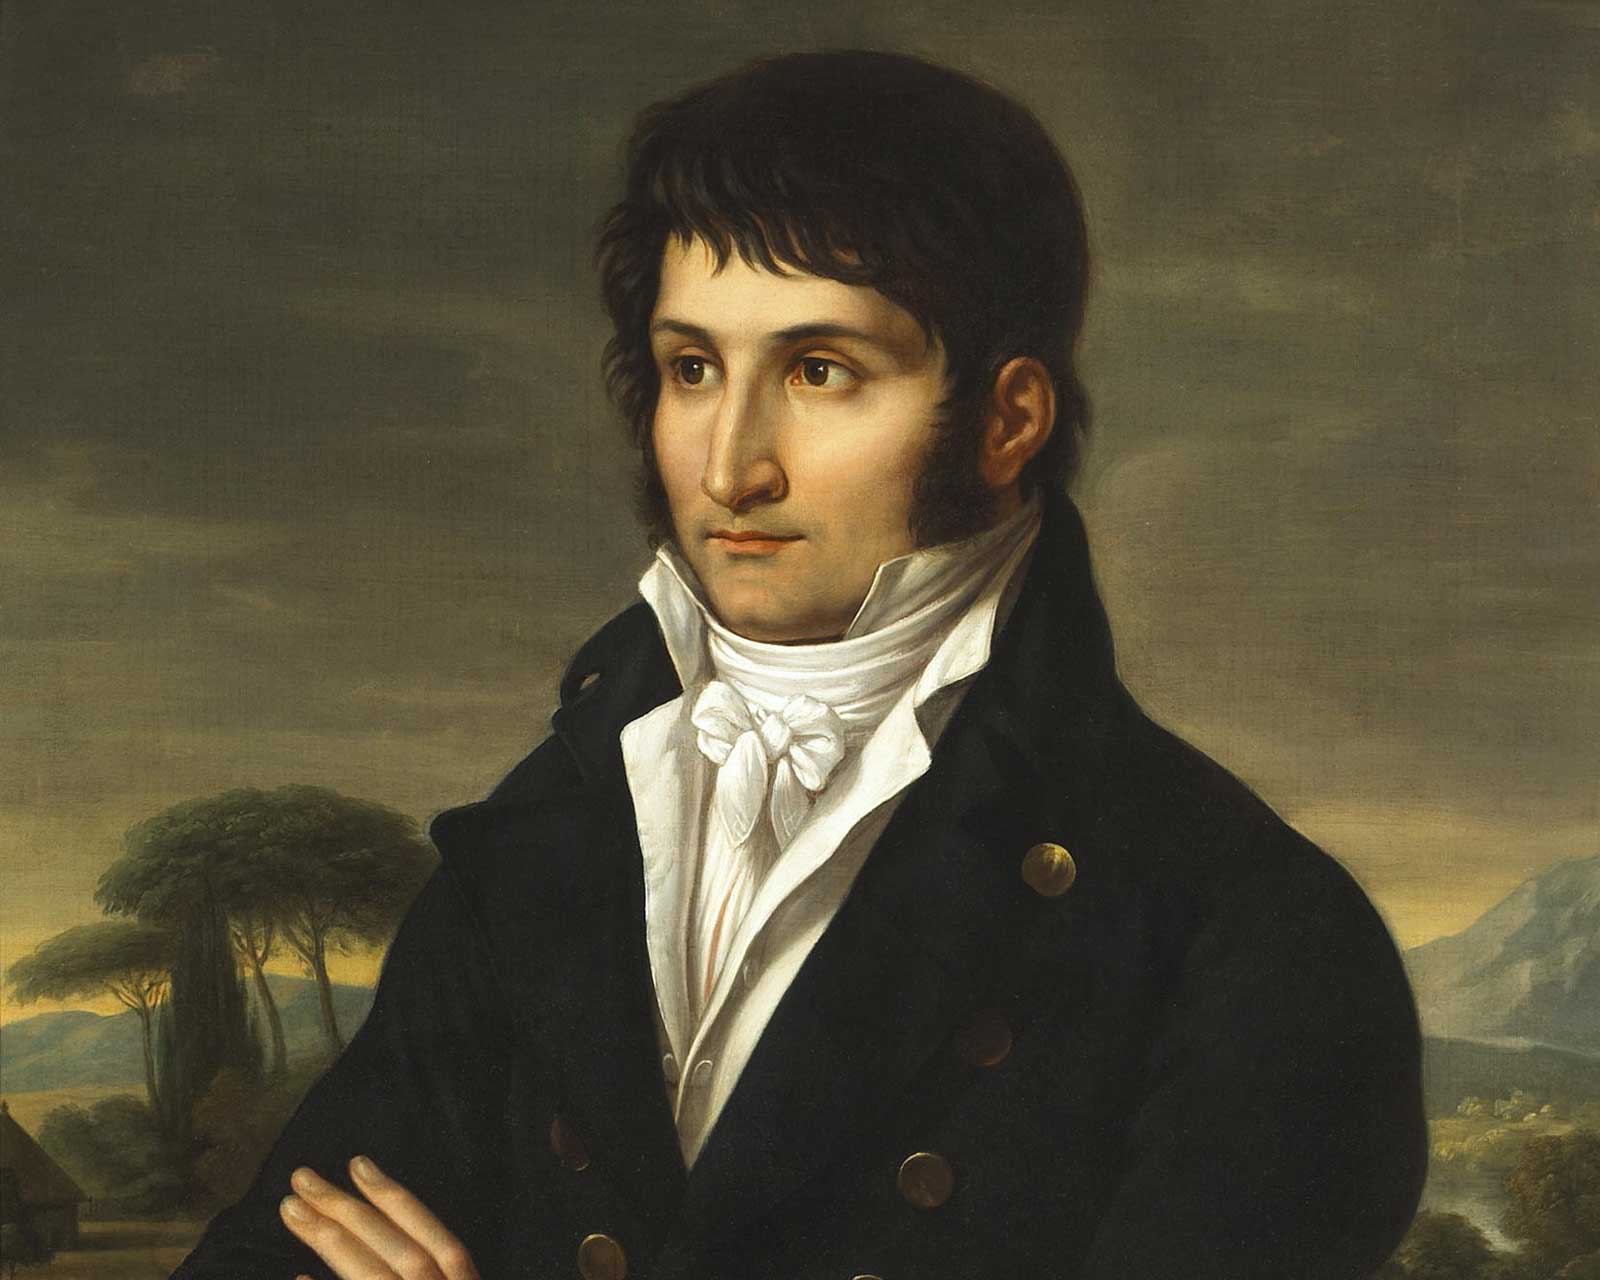 Люсьен Бонапарт, ок. 1800 г. Франсуа-Ксавье Фабр.